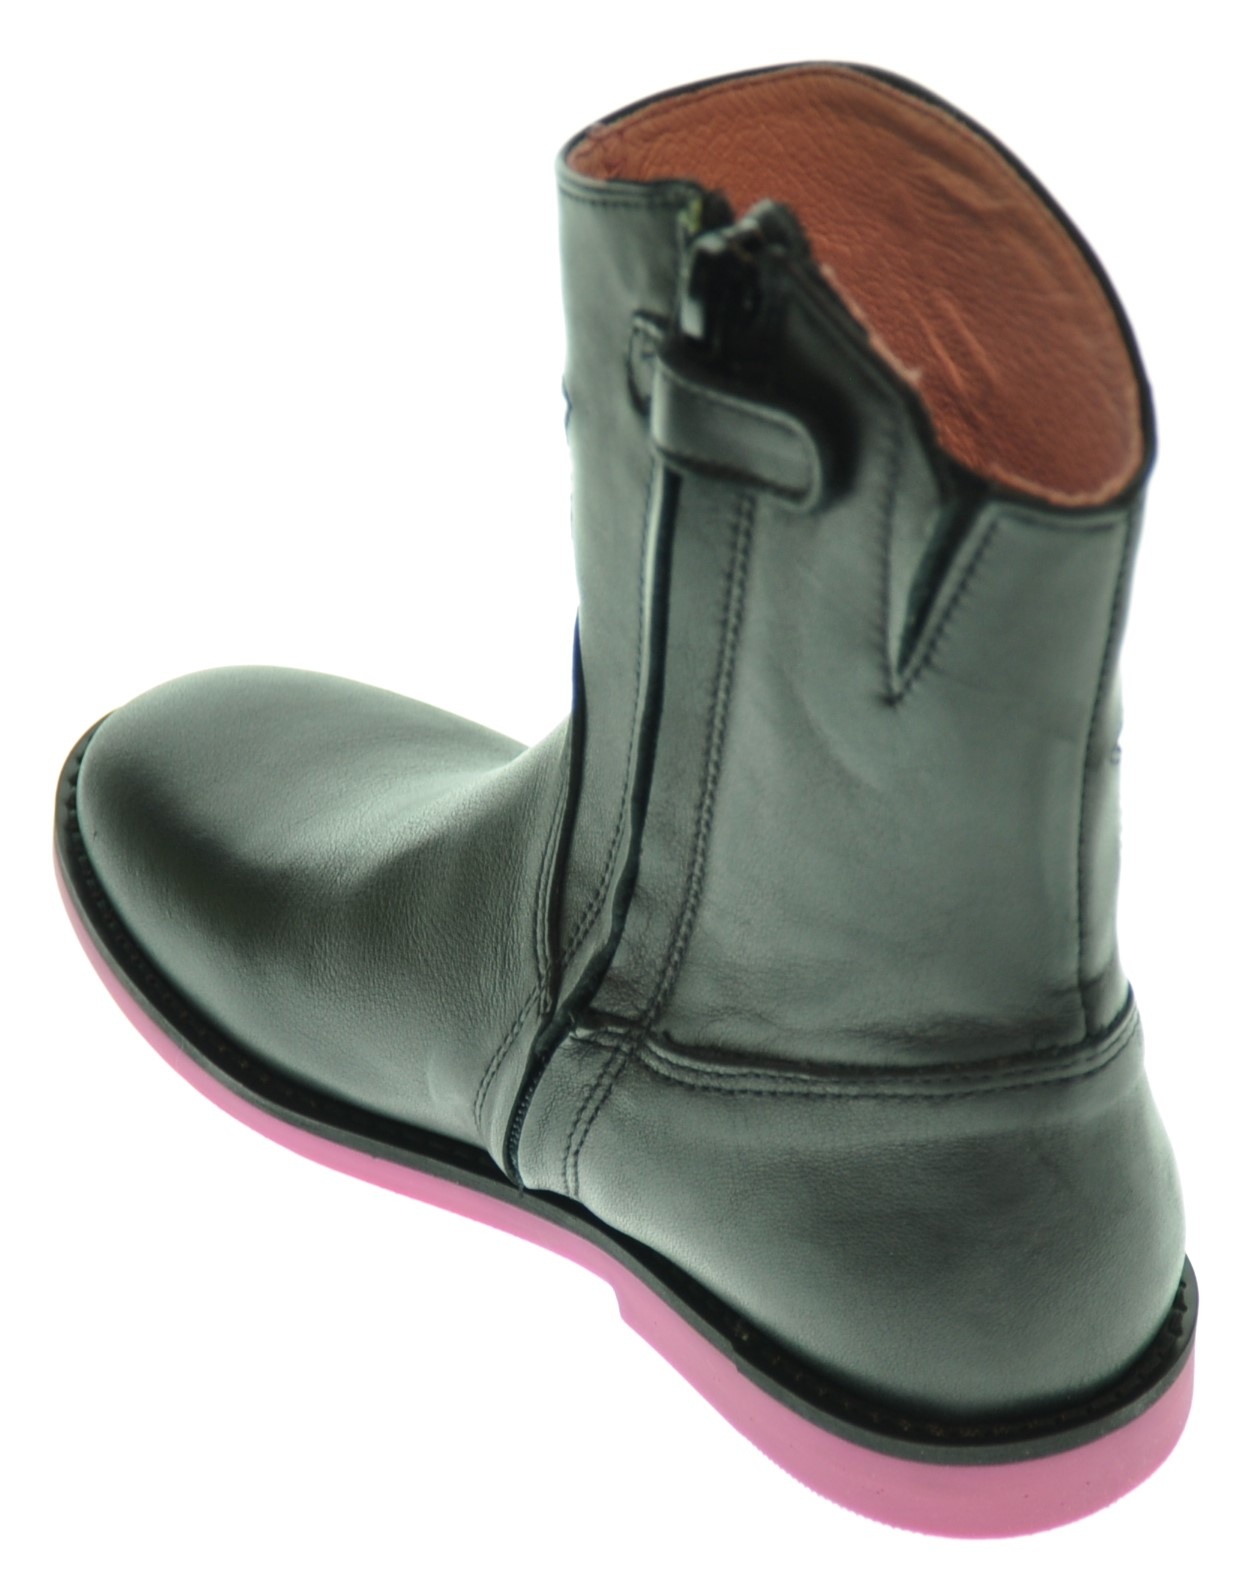 Regulatie diagonaal Specialist ShoesMe Laarsje ( 28 t/m 35 ) - Zandbergen Shoes